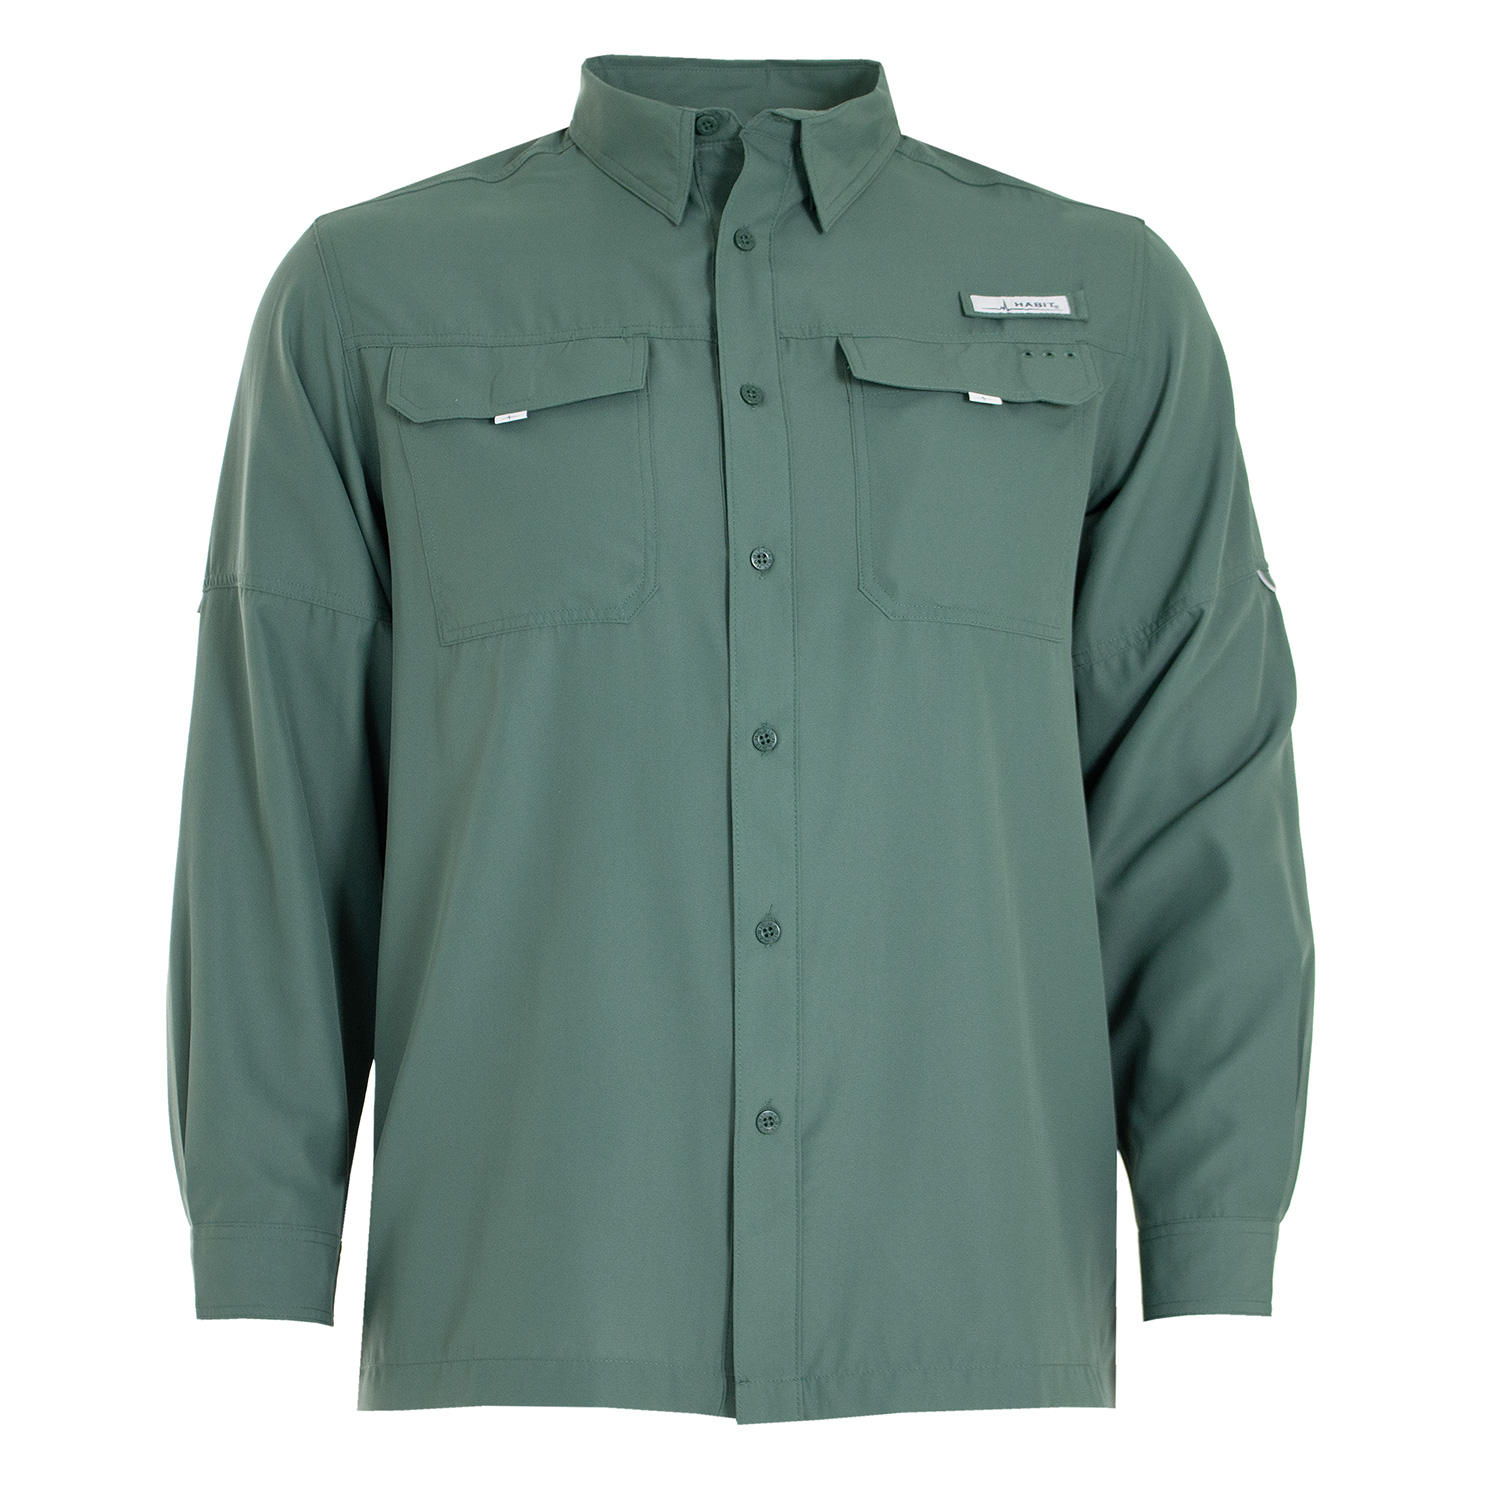 Habit Men's UPF 40+ UV Protection Long-Sleeve Fishing Shirt - Pineneedle XXXXL